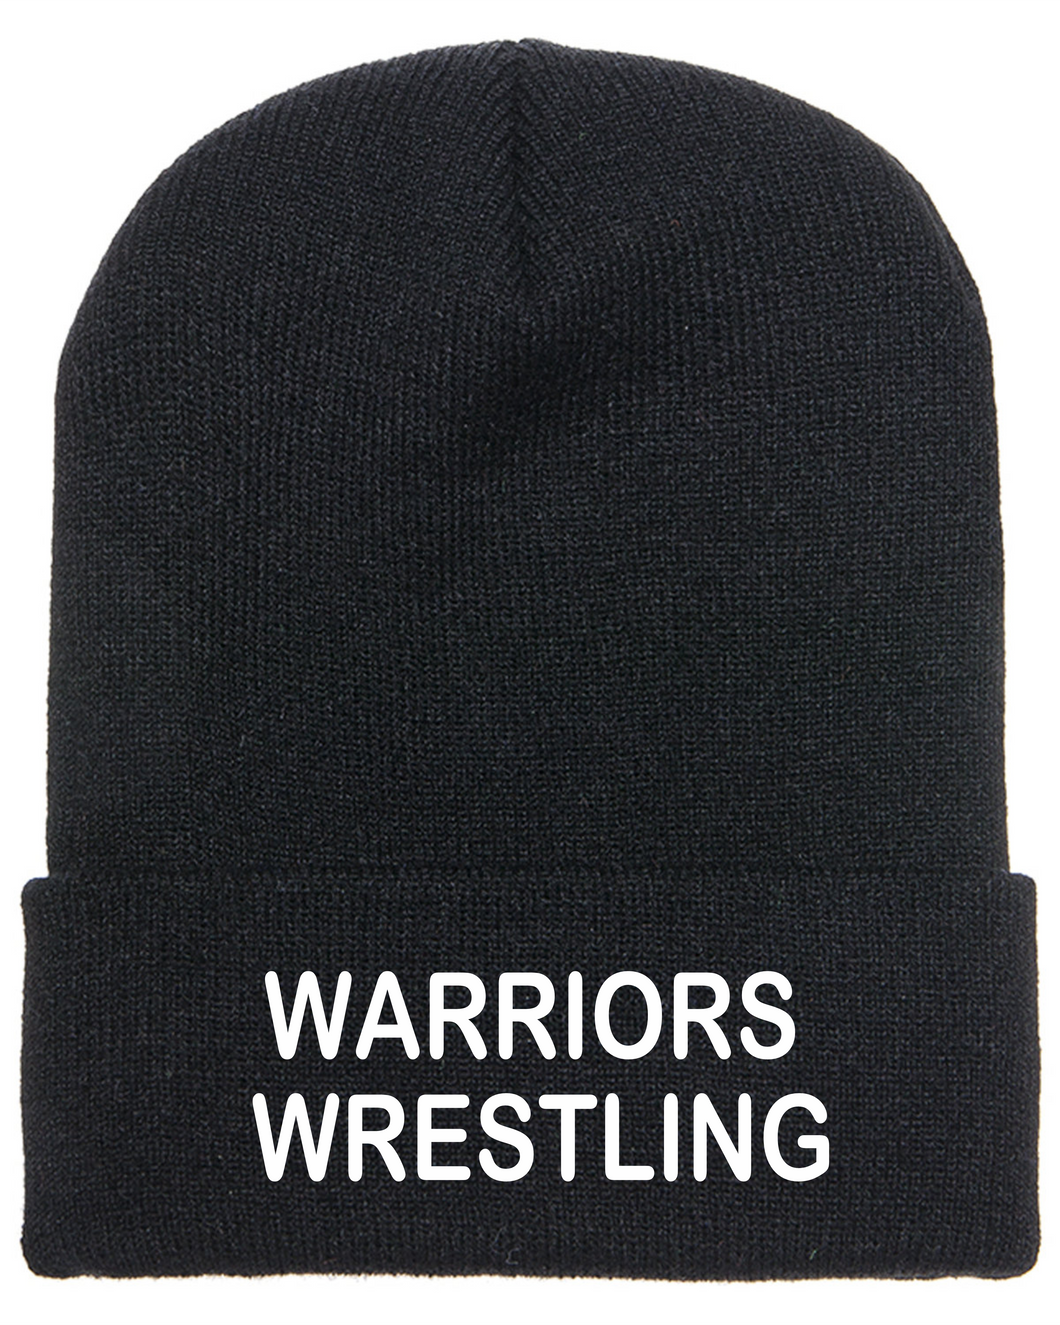 CHS-WRES-915-6 - Yupoong Adult Cuffed Knit Beanie - Warriors Wrestling Logo